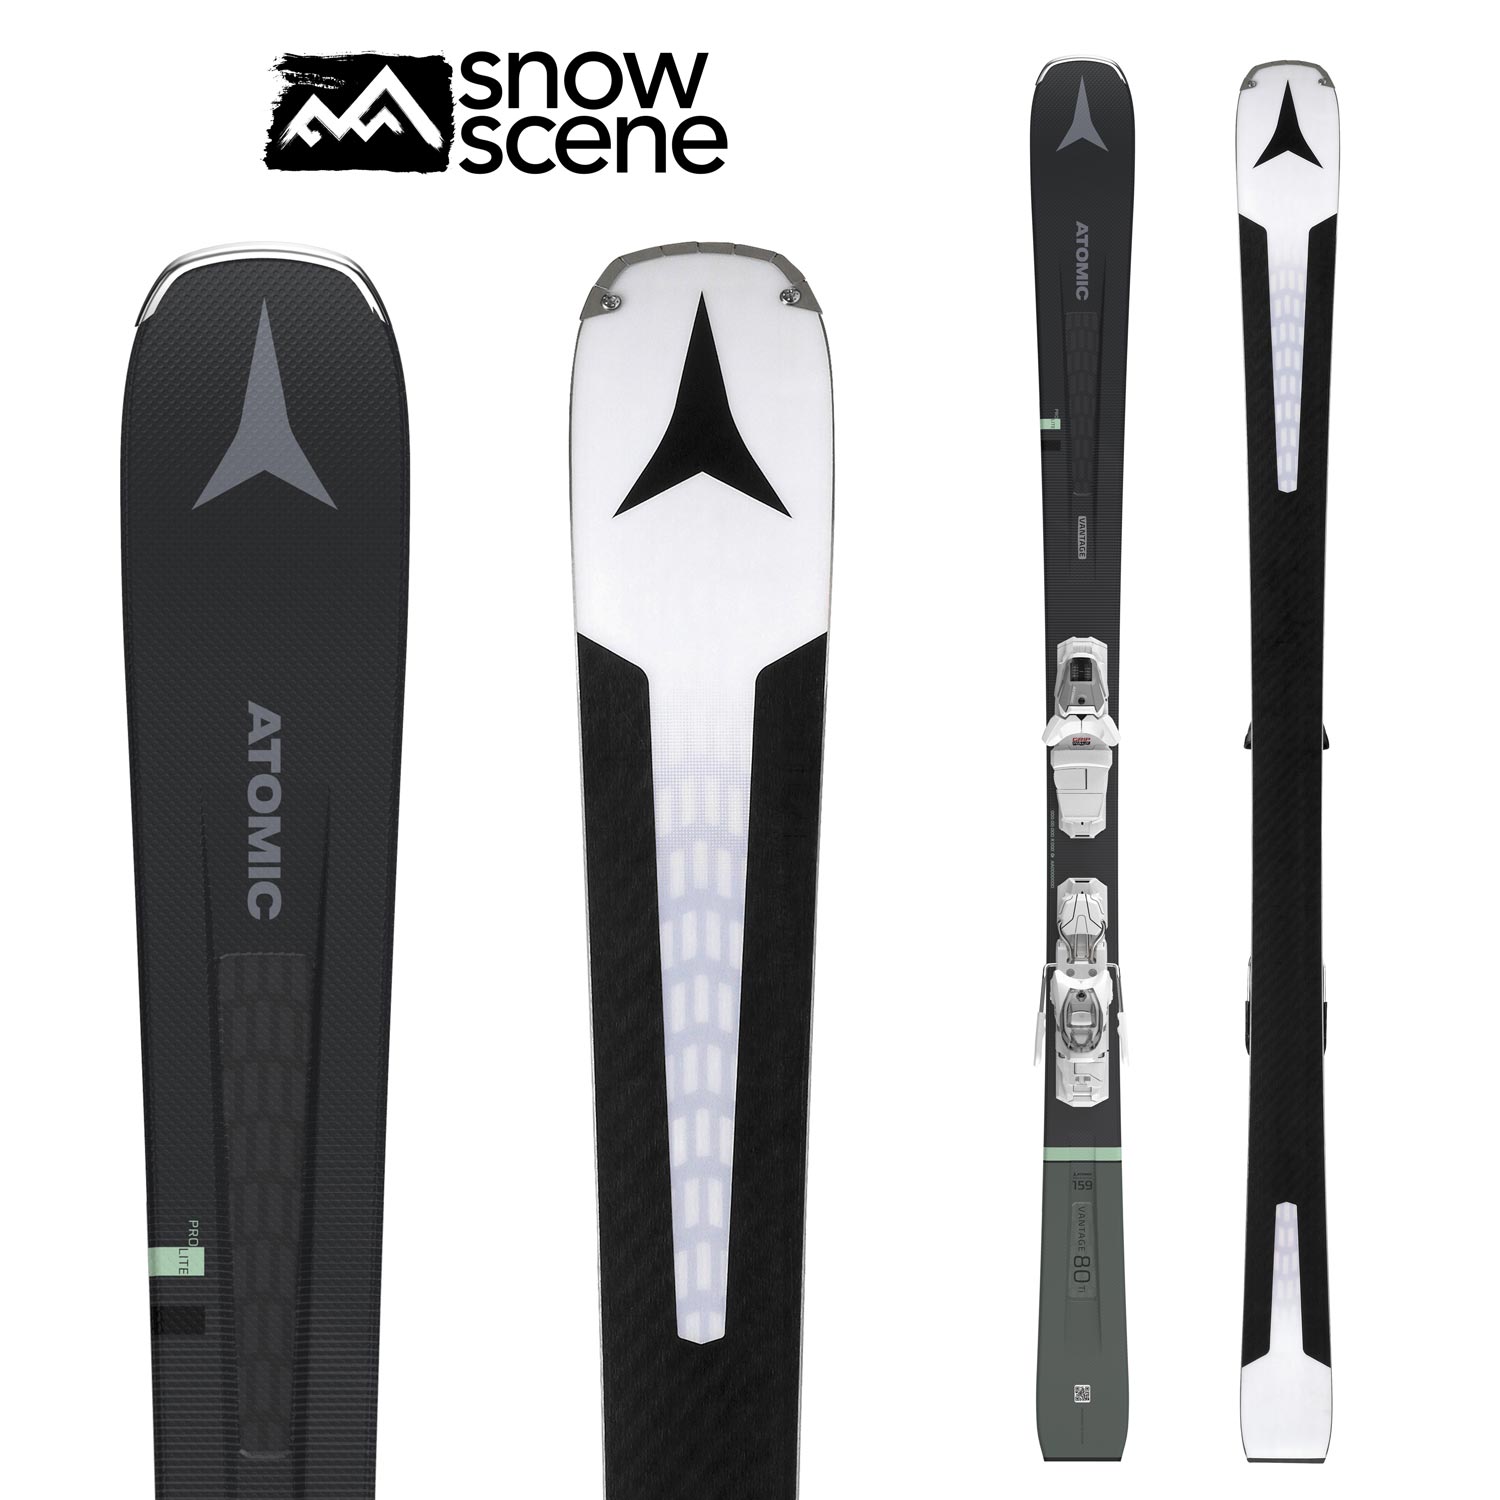 2021 Atomic Vantage 80 Ti W- Shop Skis and snow gear online nz - snowscene